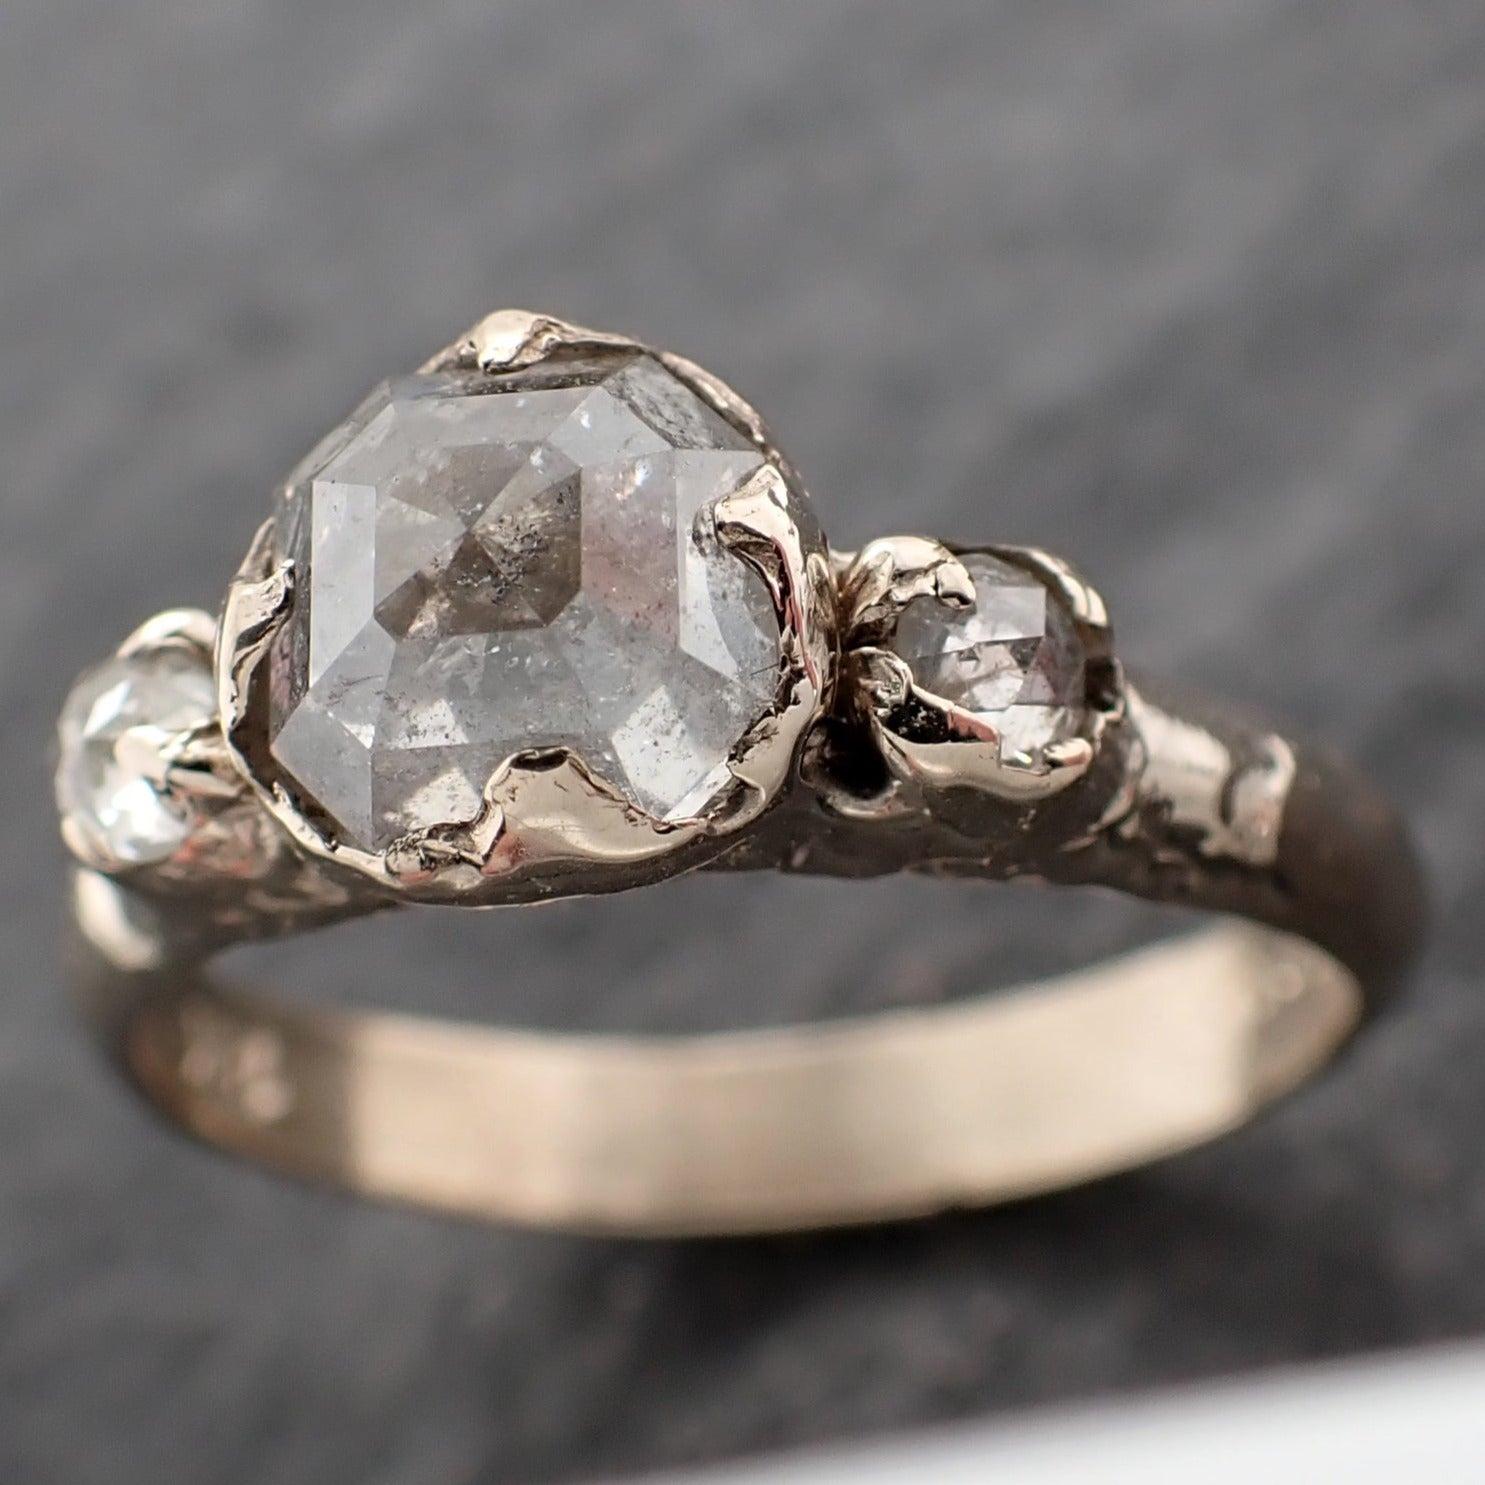 Faceted Fancy cut white Diamond Multi stone Engagement 18k White Gold Wedding Ring byAngeline 2484